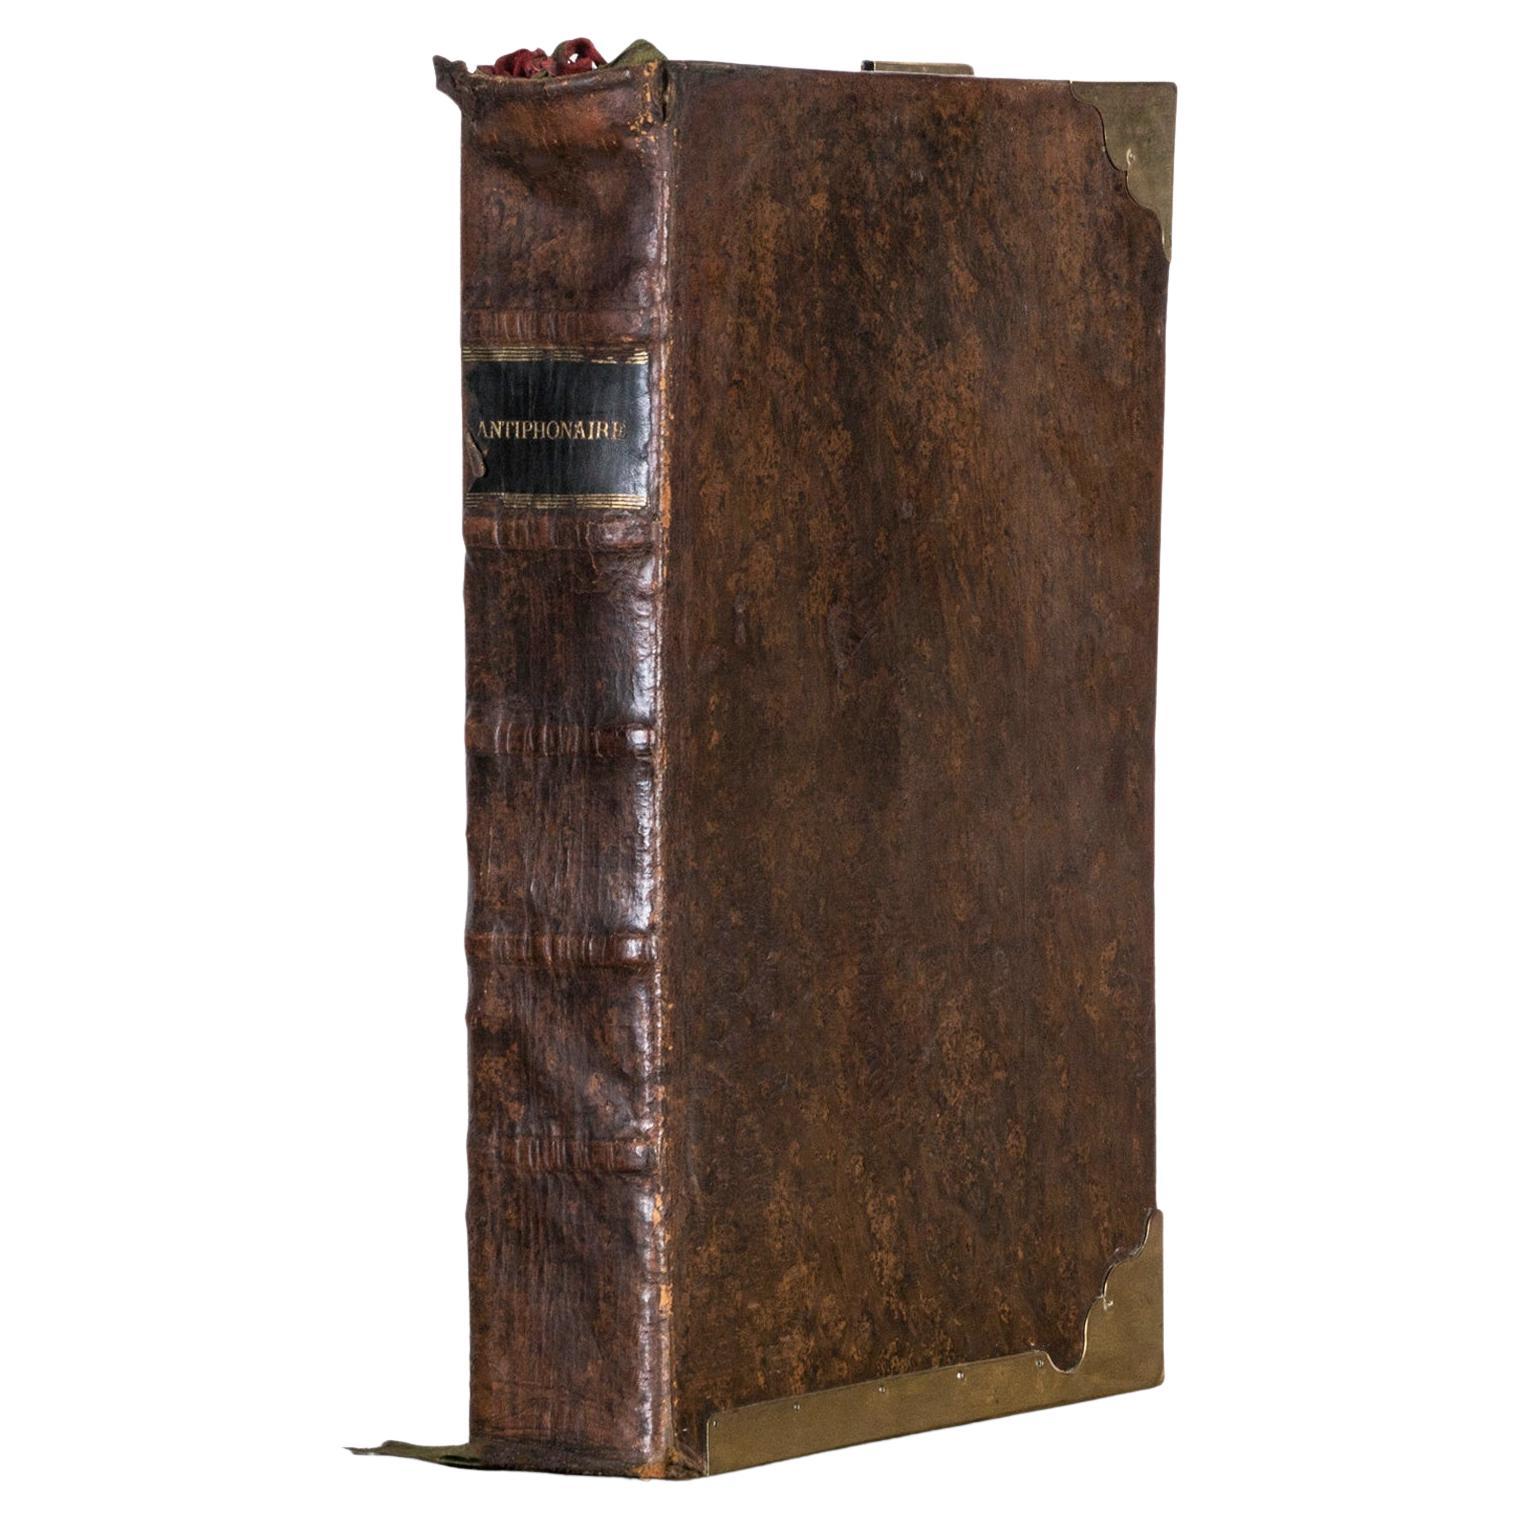 Großer antiker römischer Hymnal- oder Song Book-Antiphonaire, 1862  